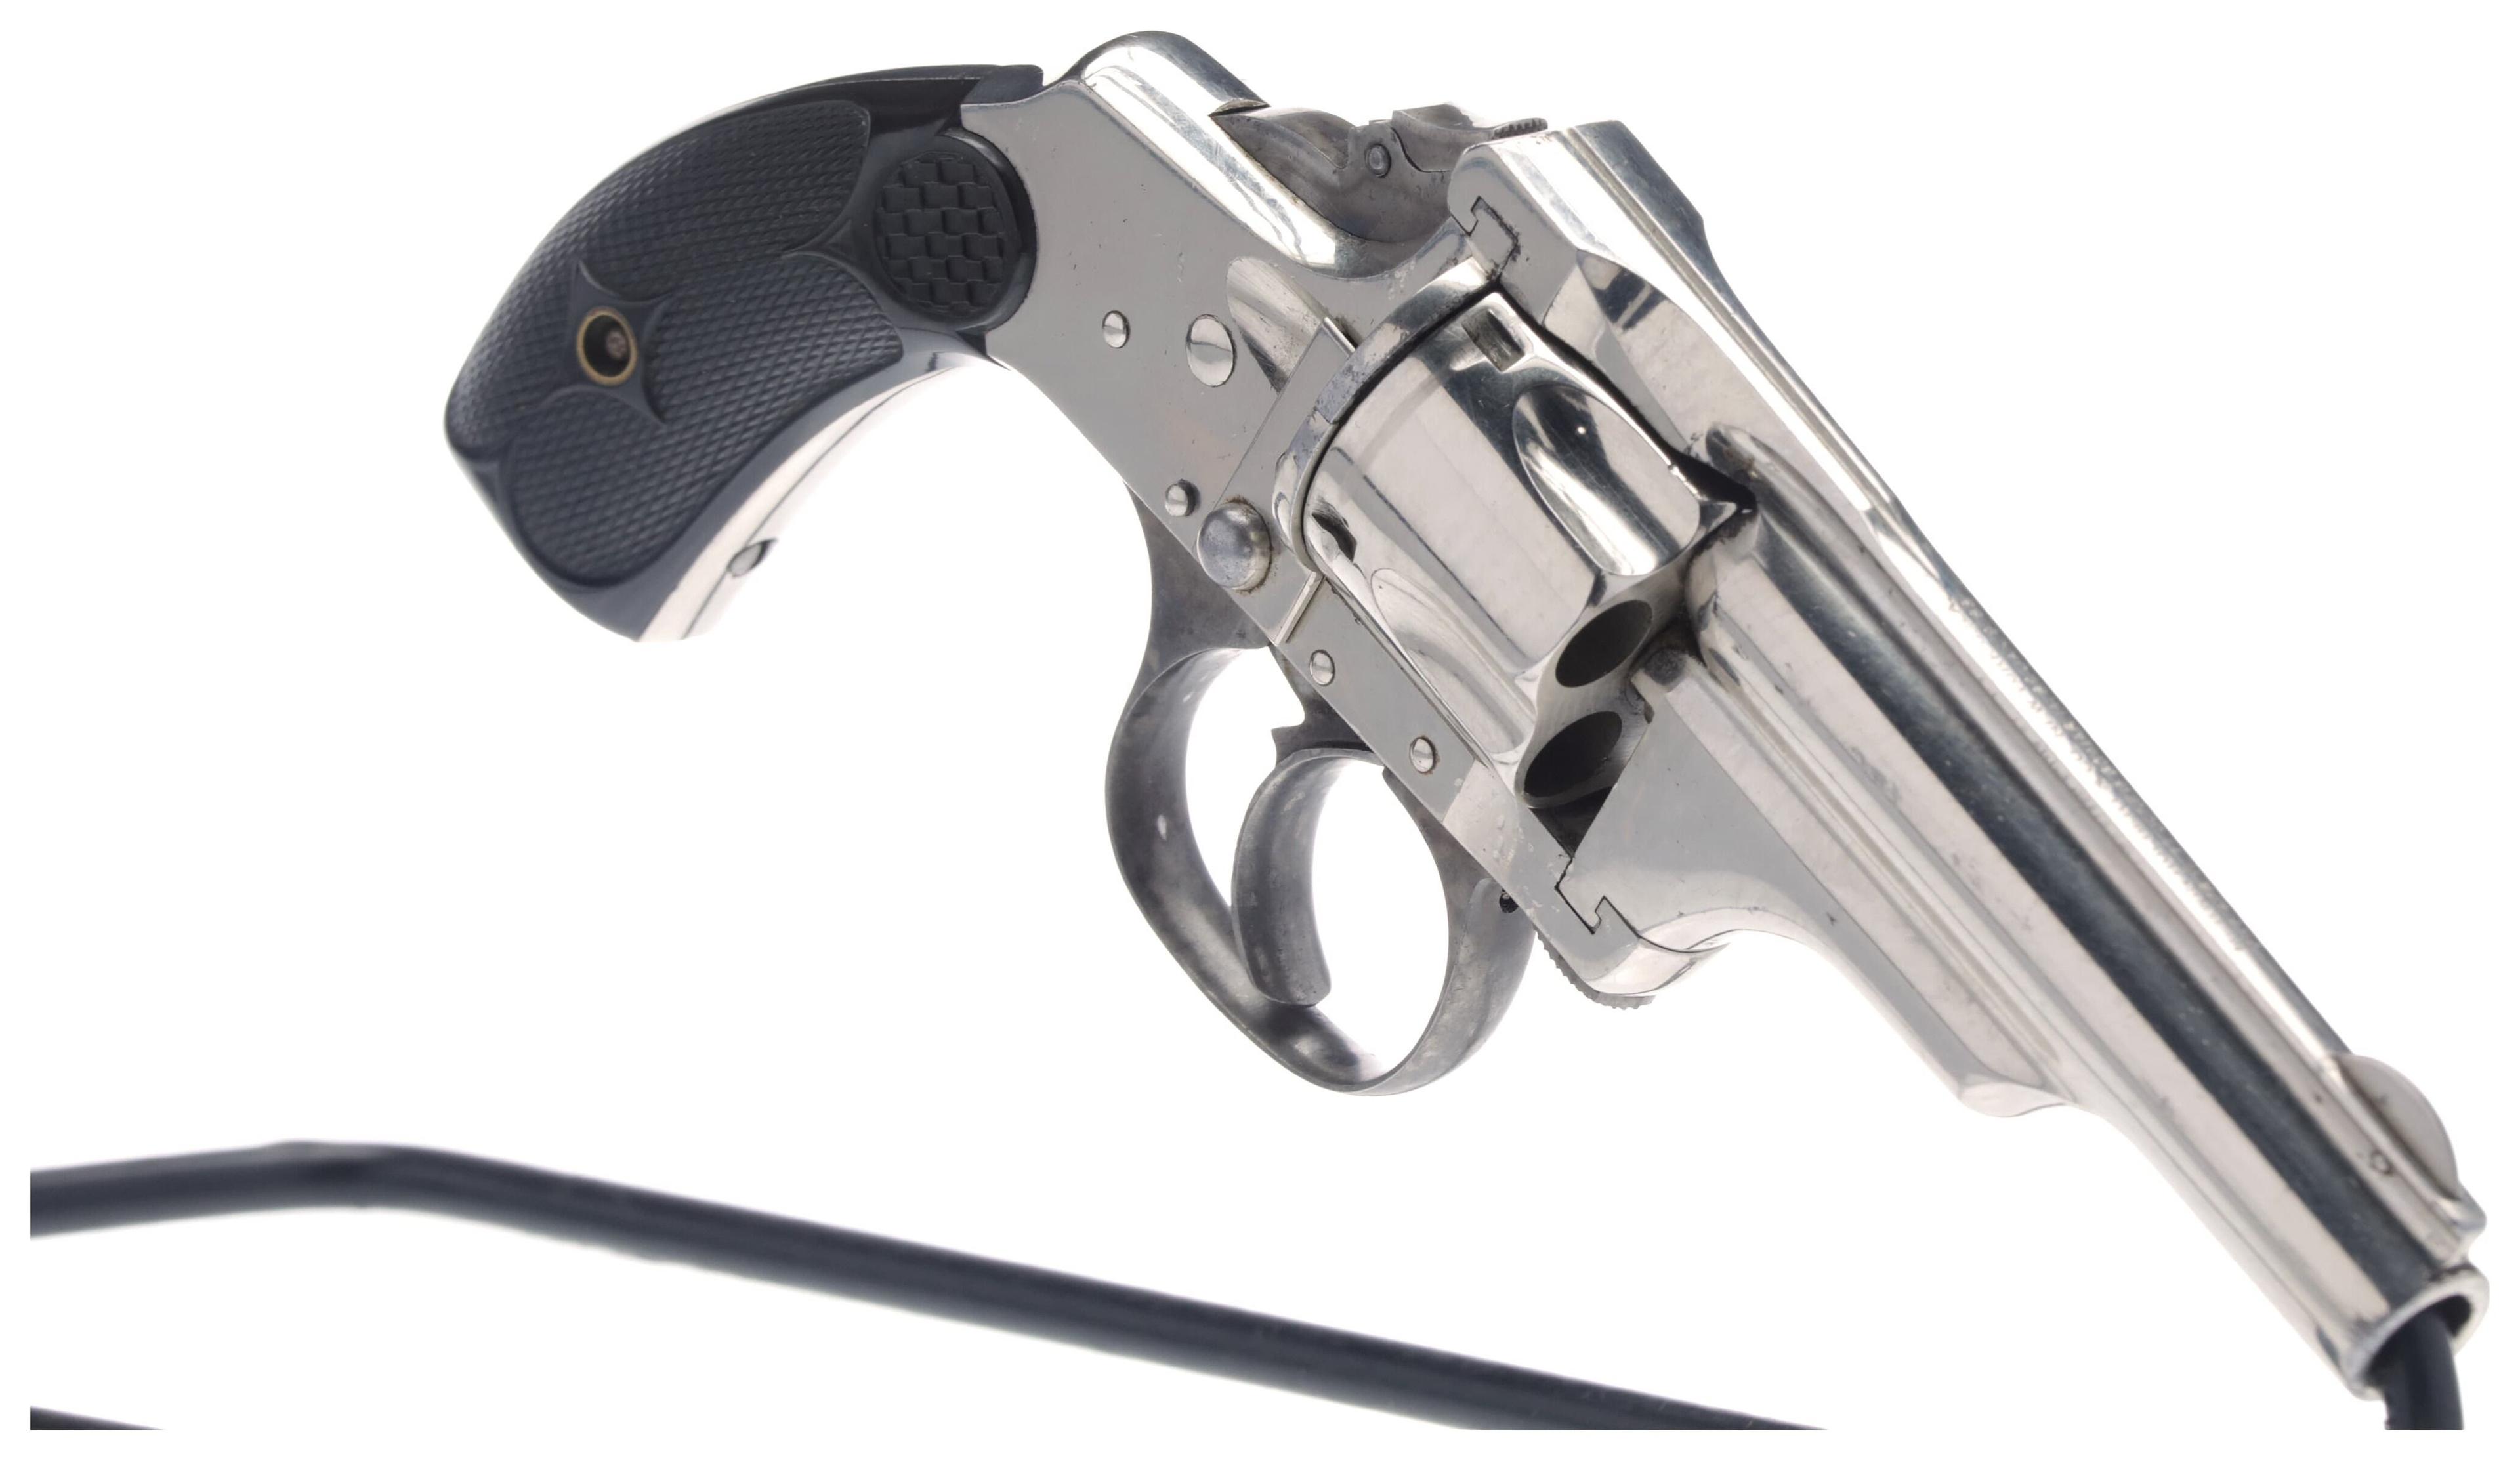 Three Merwin, Hulbert & Co. Double Action Revolvers